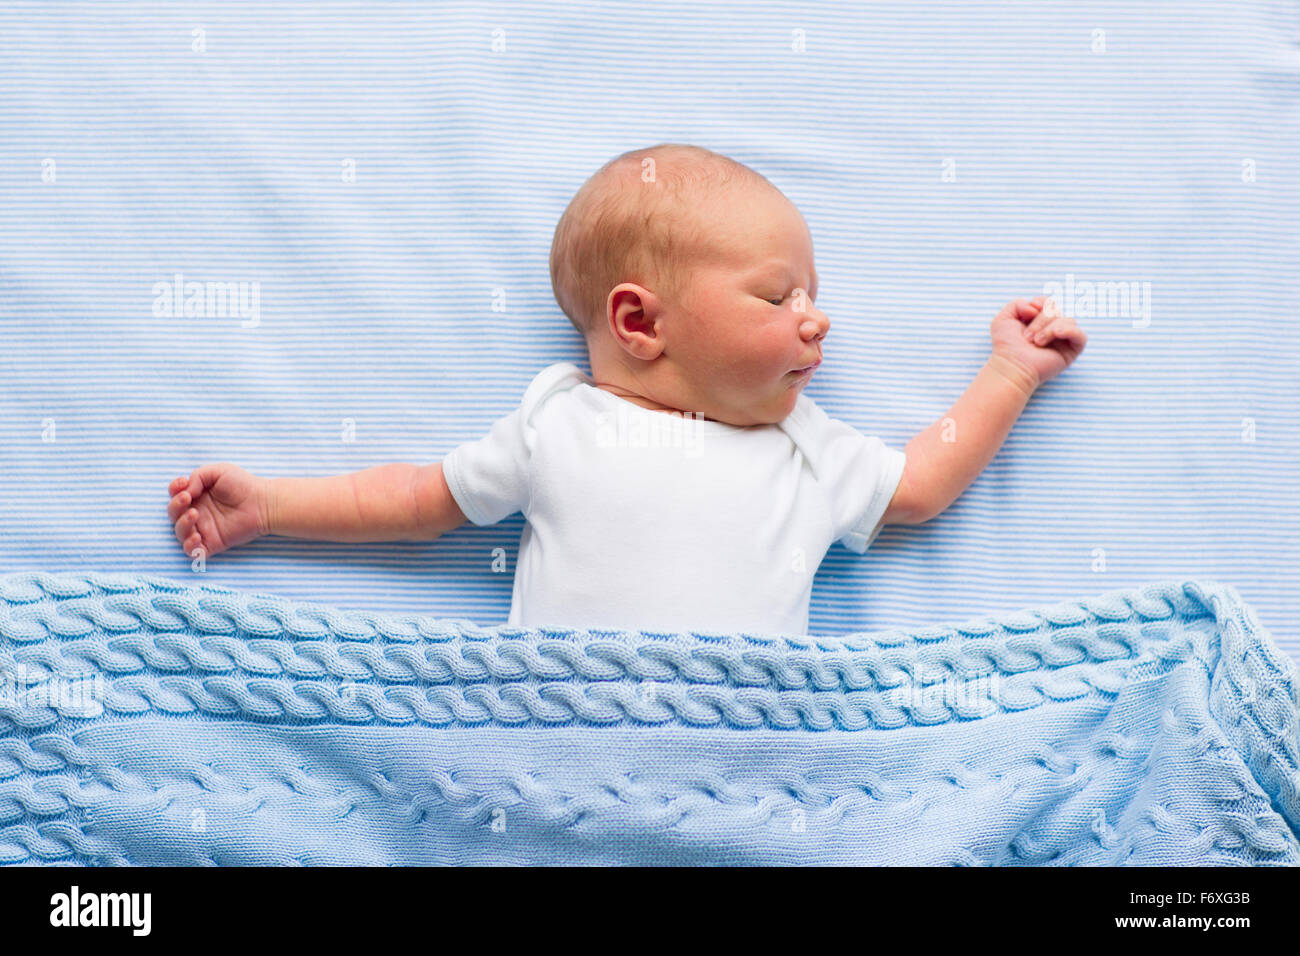 Newborn baby boy in bed. New born child sleeping under a blue knitted blanket. Children sleep. Bedding for kids. Stock Photo